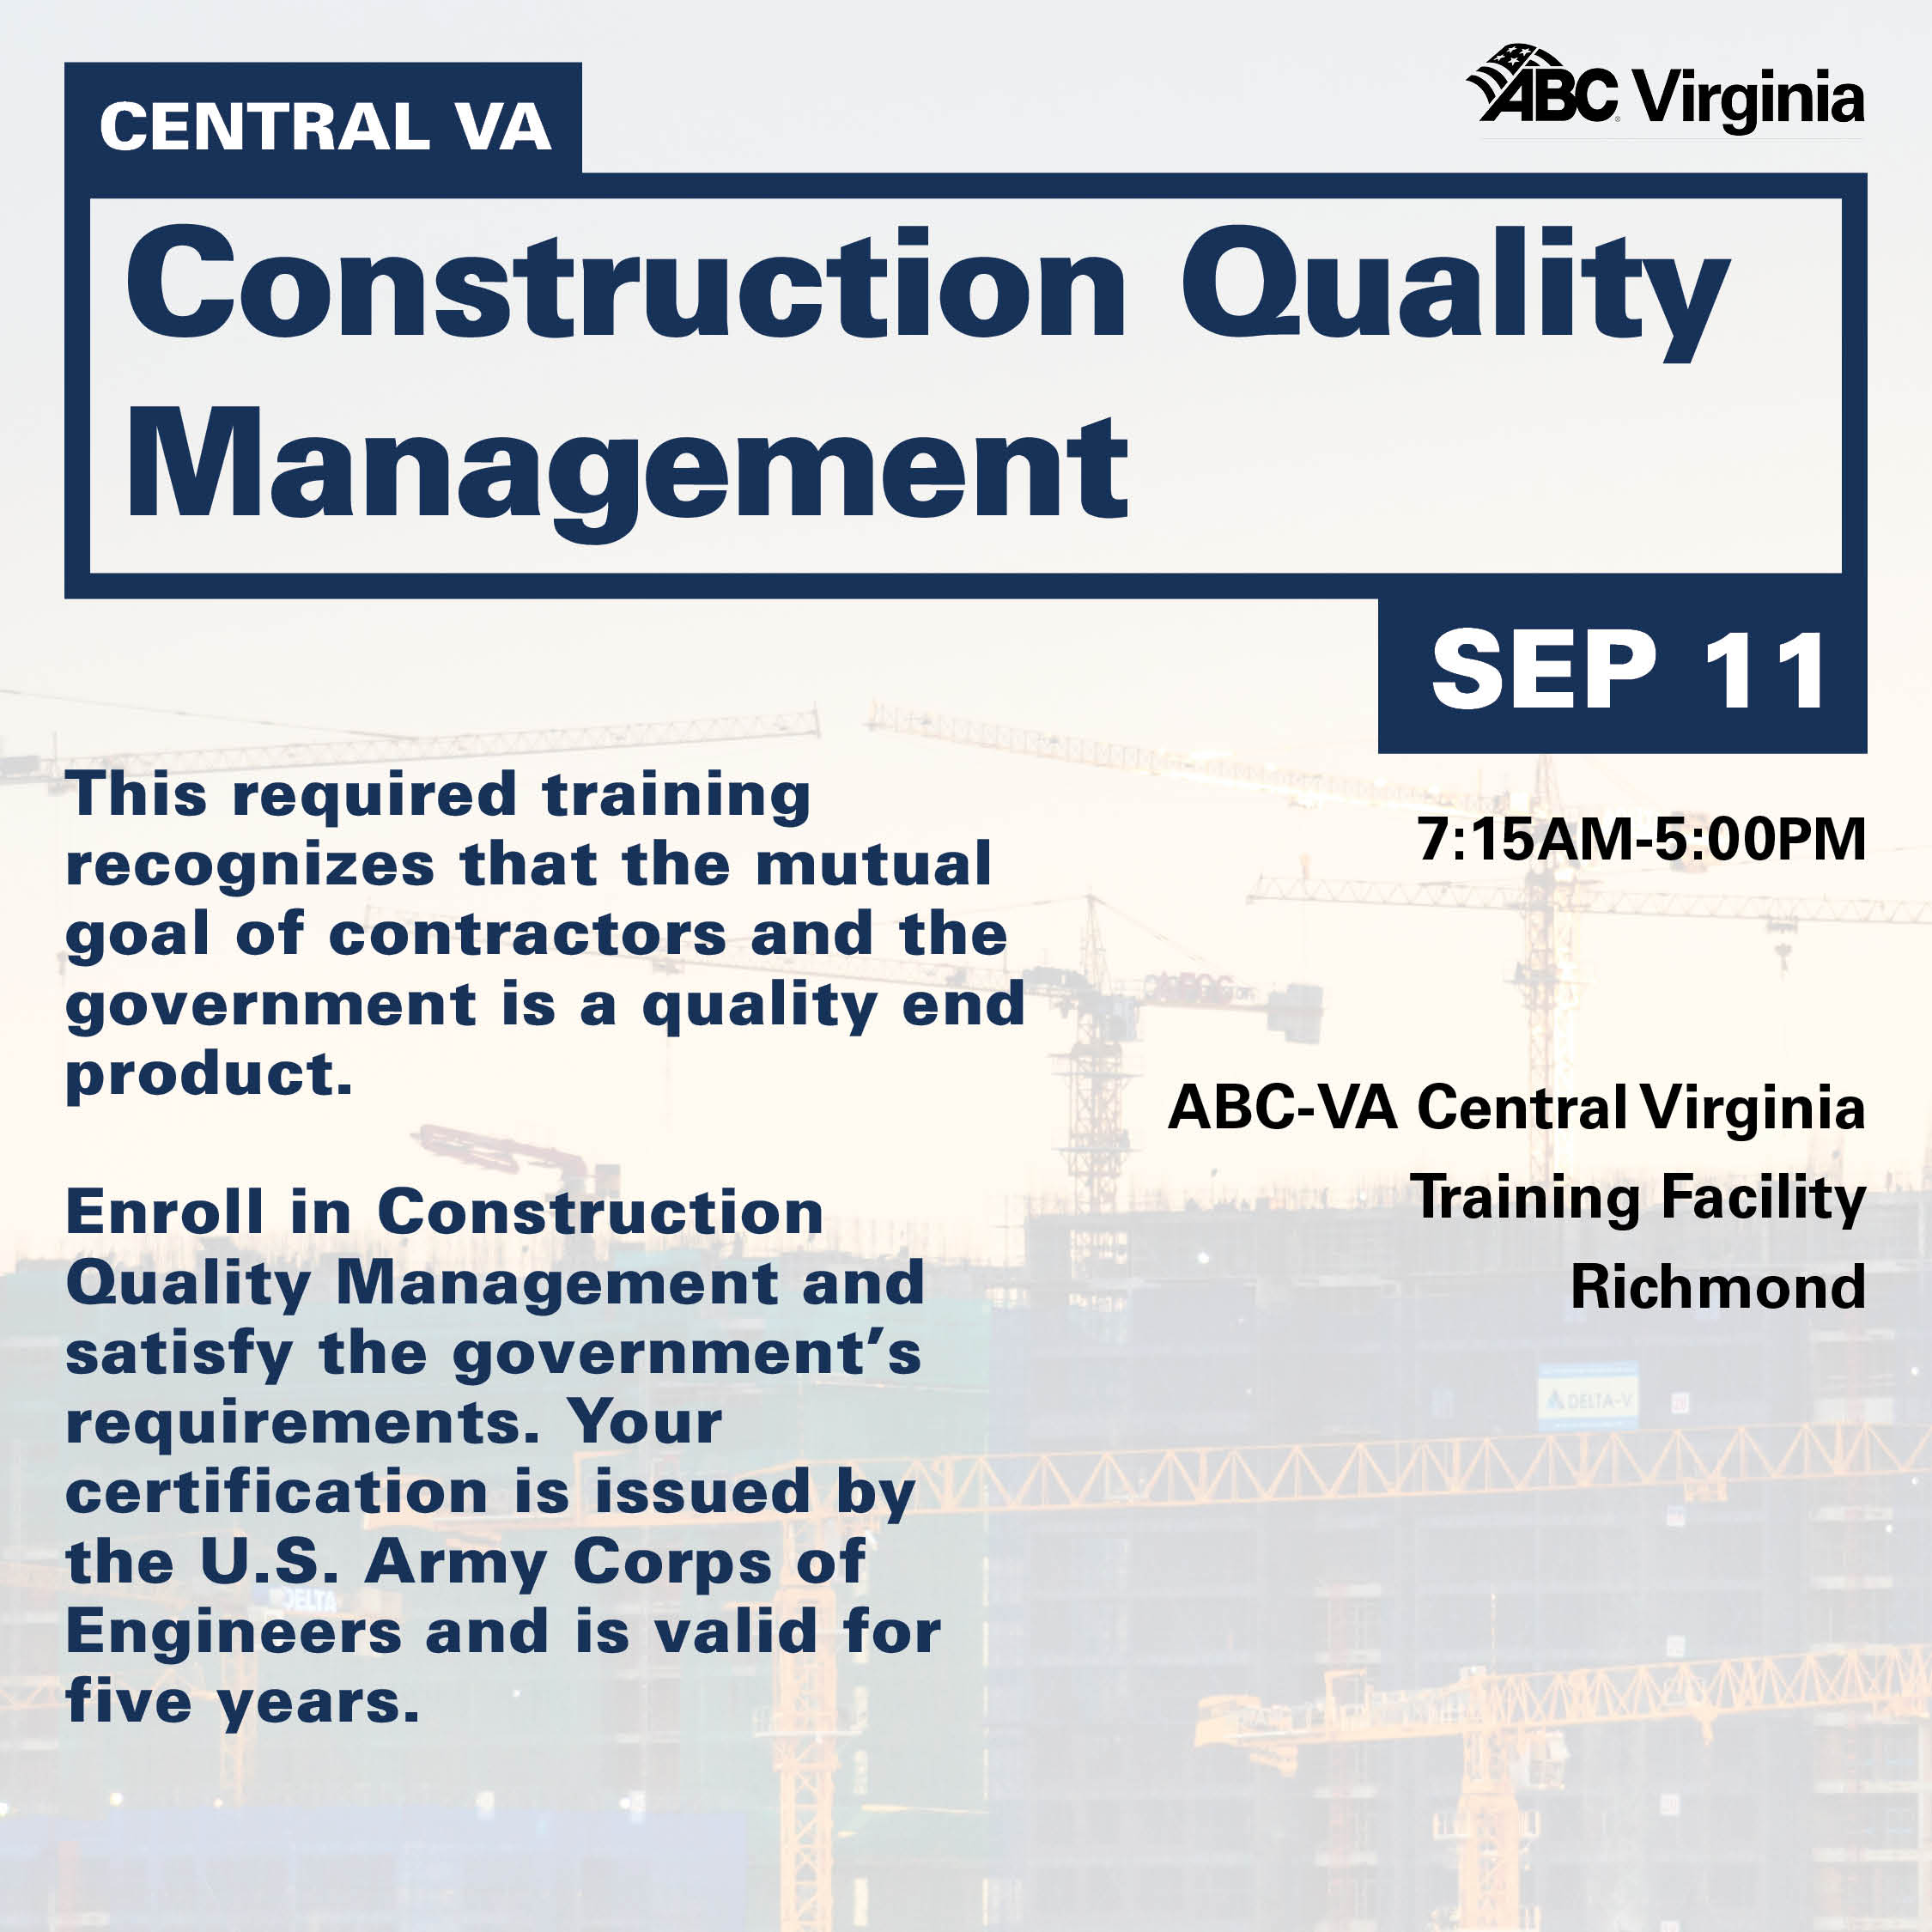 CV Construction Quality Management Sep 11 WEB